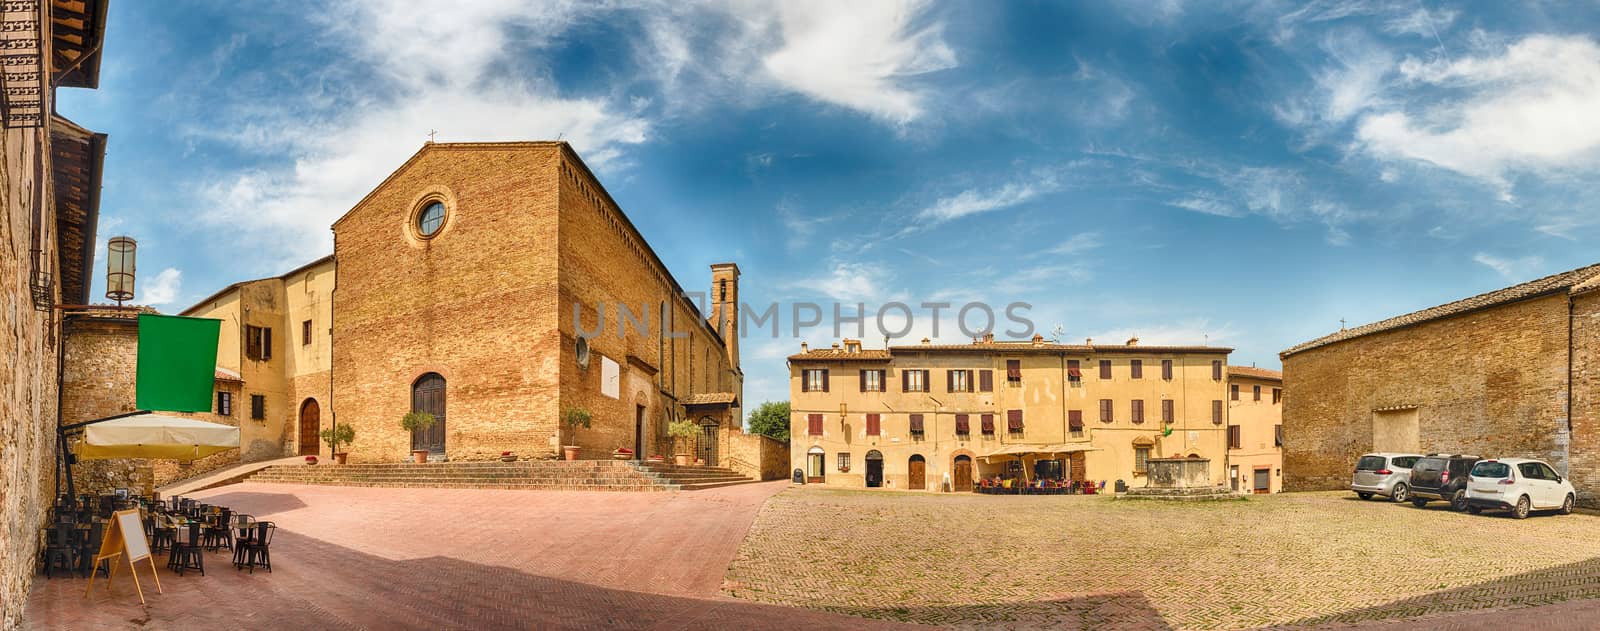 Church of Sant'Agostino in San Gimignano, Tuscany, Italy by marcorubino